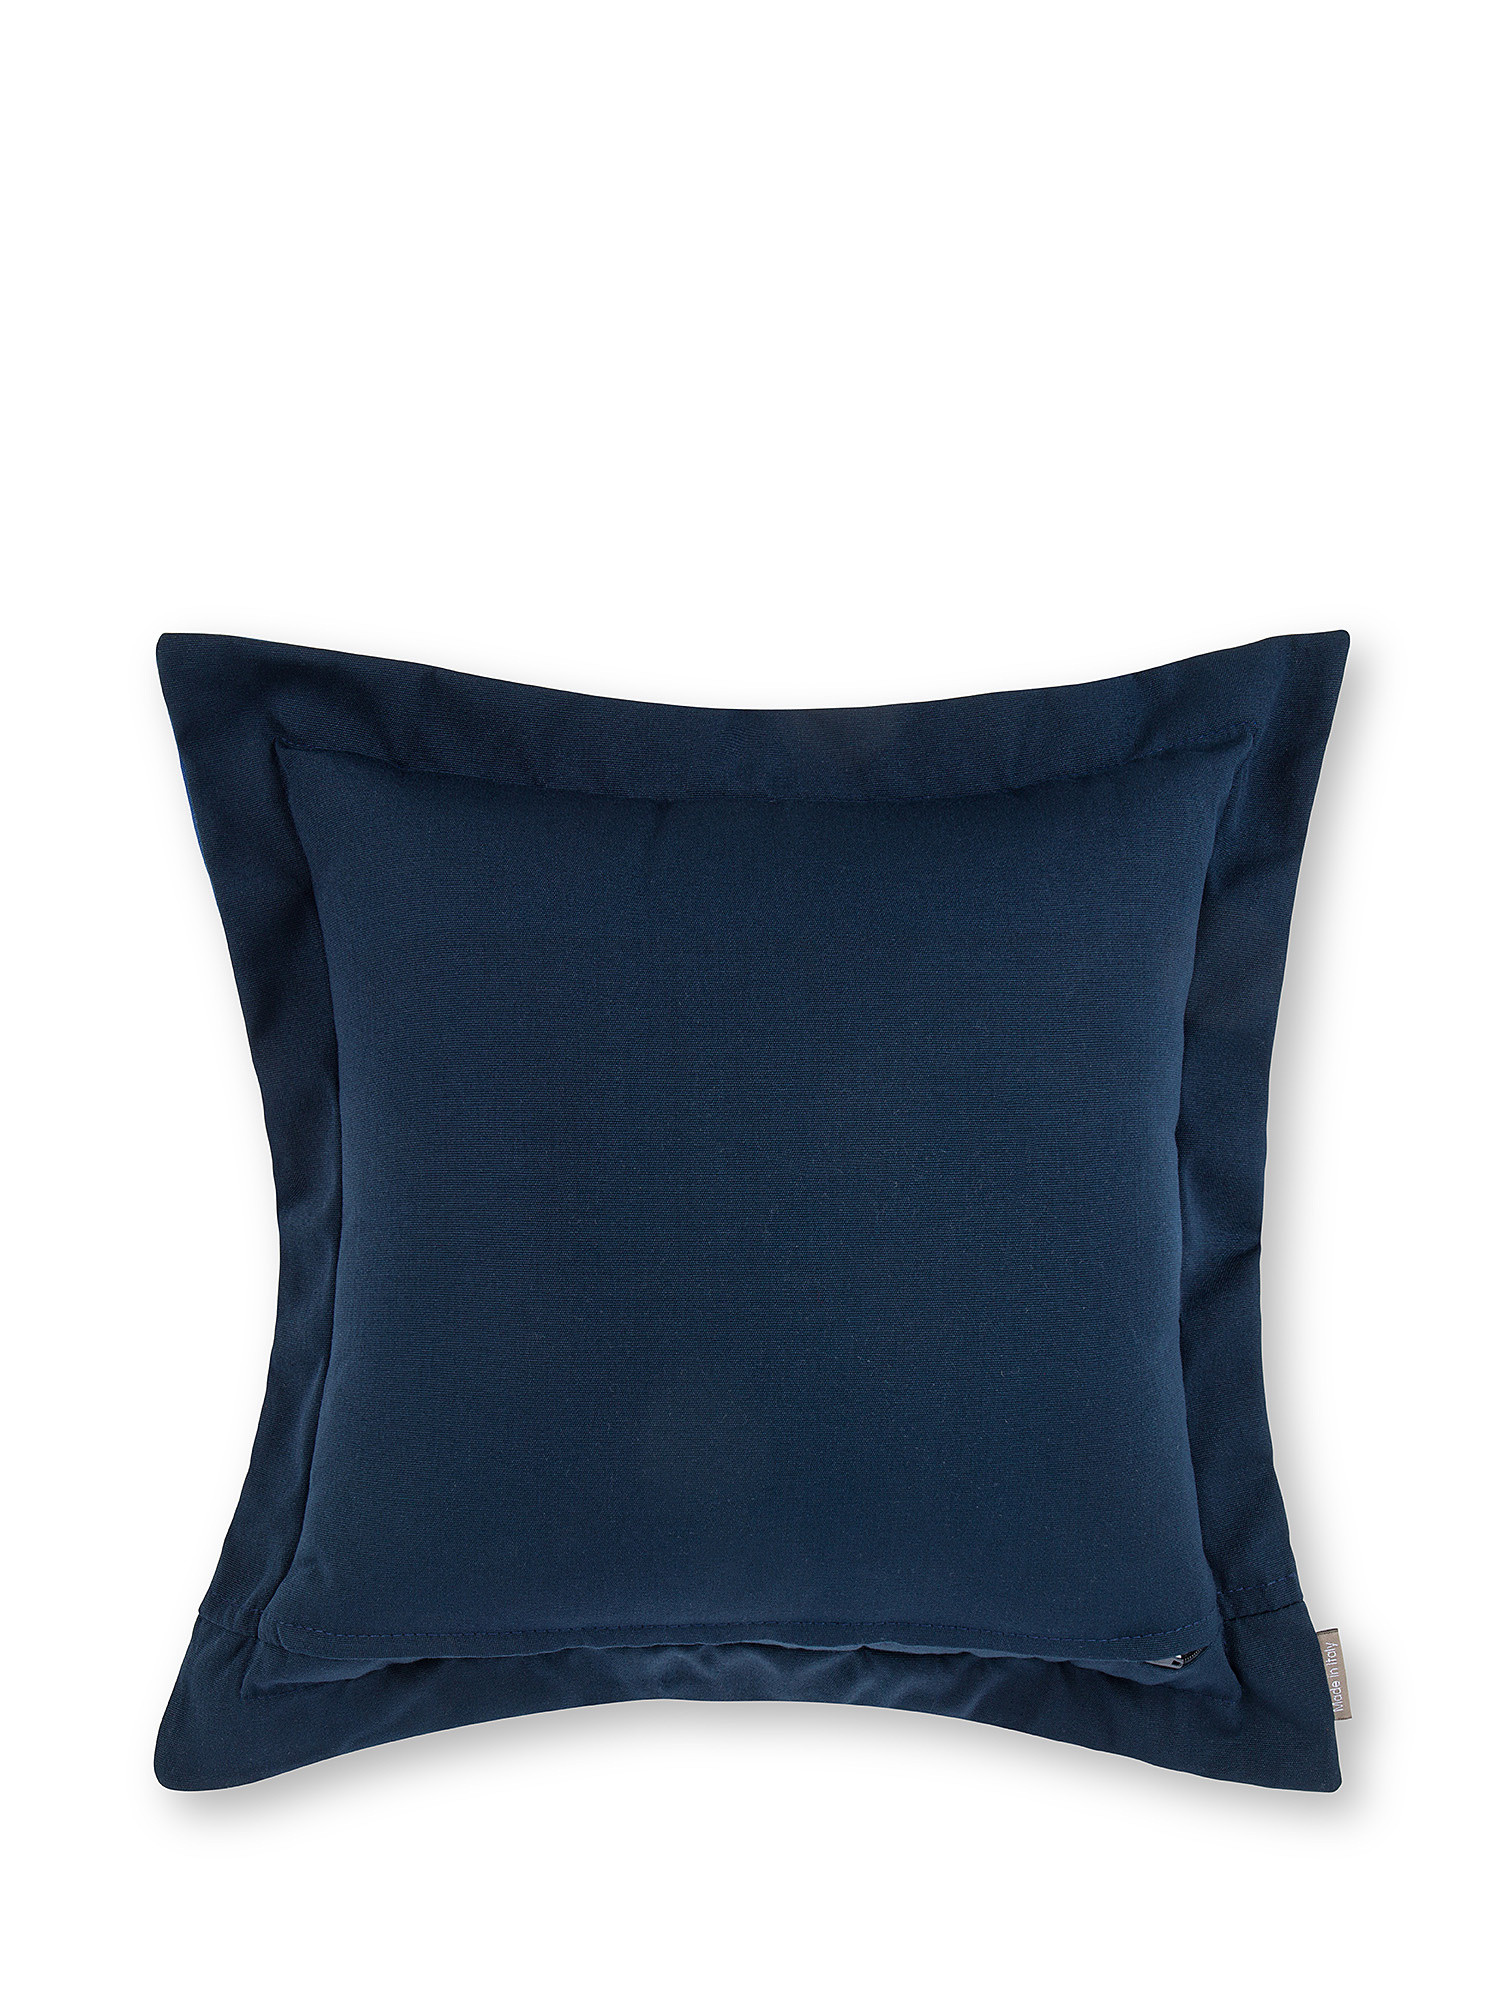 Cuscino da esterno in tessuto double color 45x45cm, Blu, large image number 1